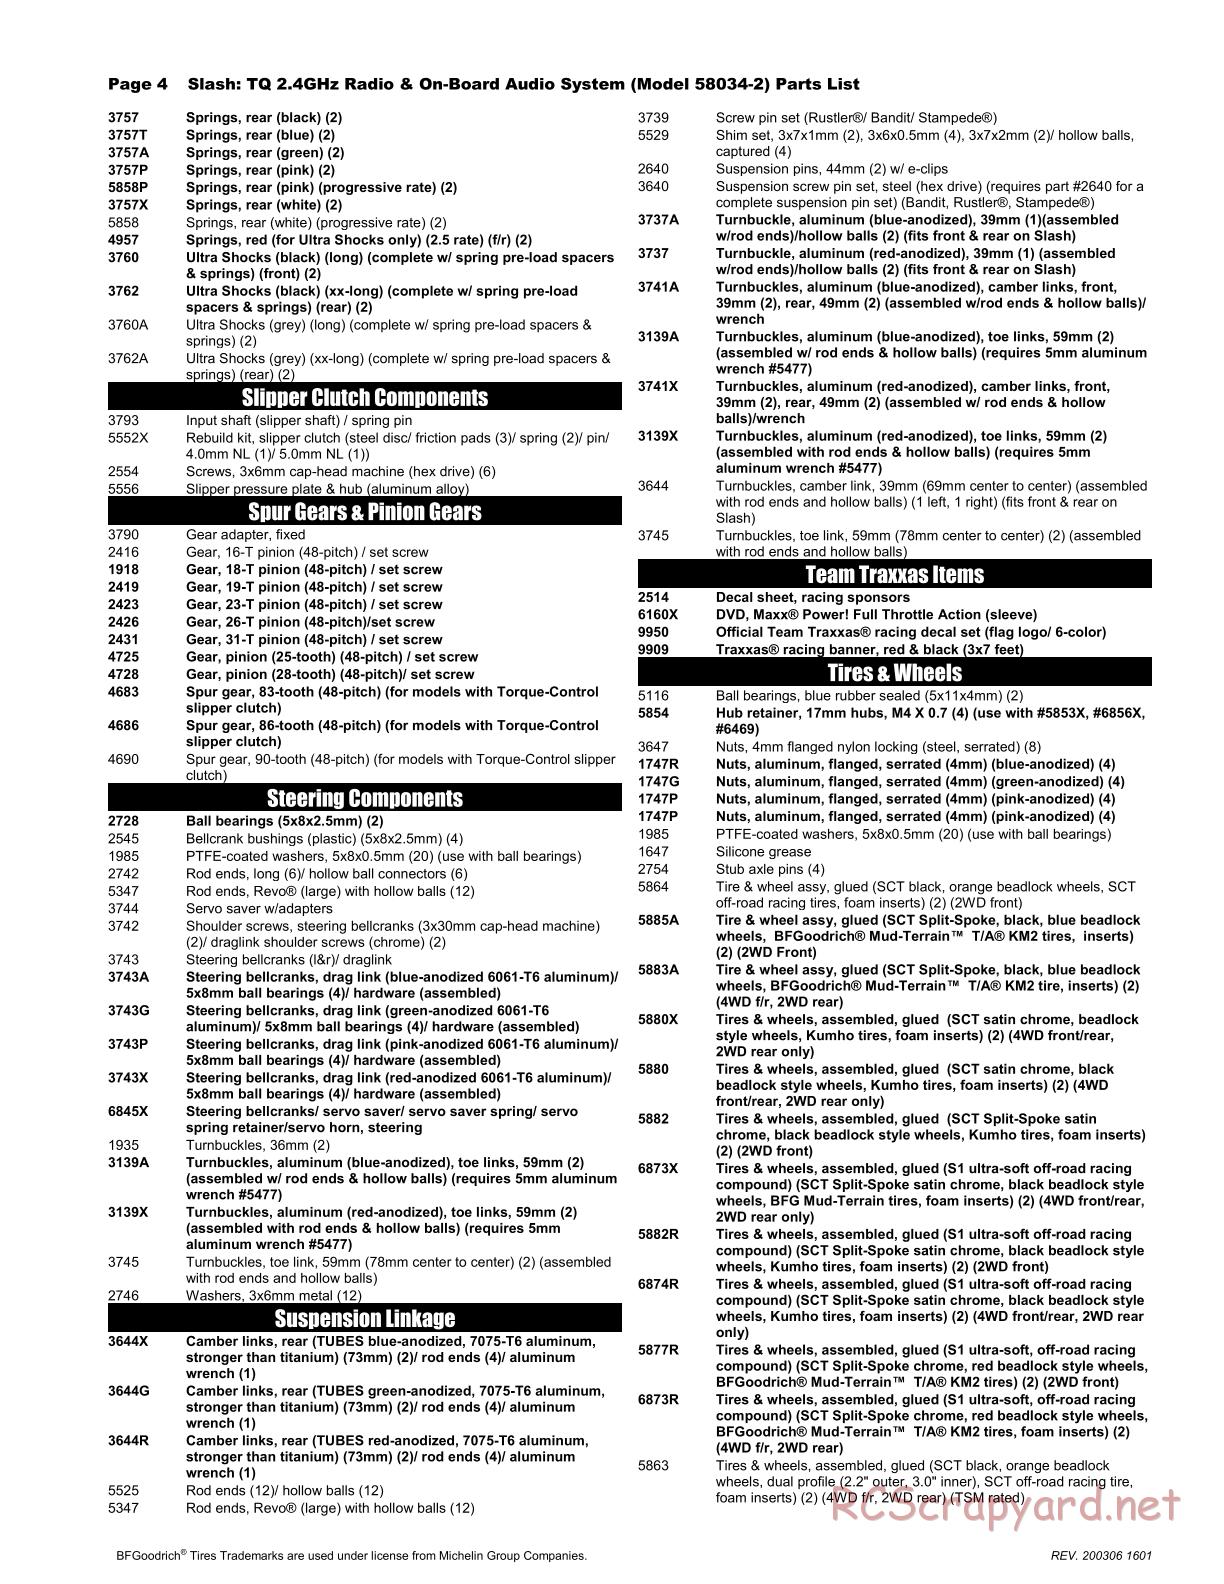 Traxxas - Slash OBA 2WD - Parts List - Page 4